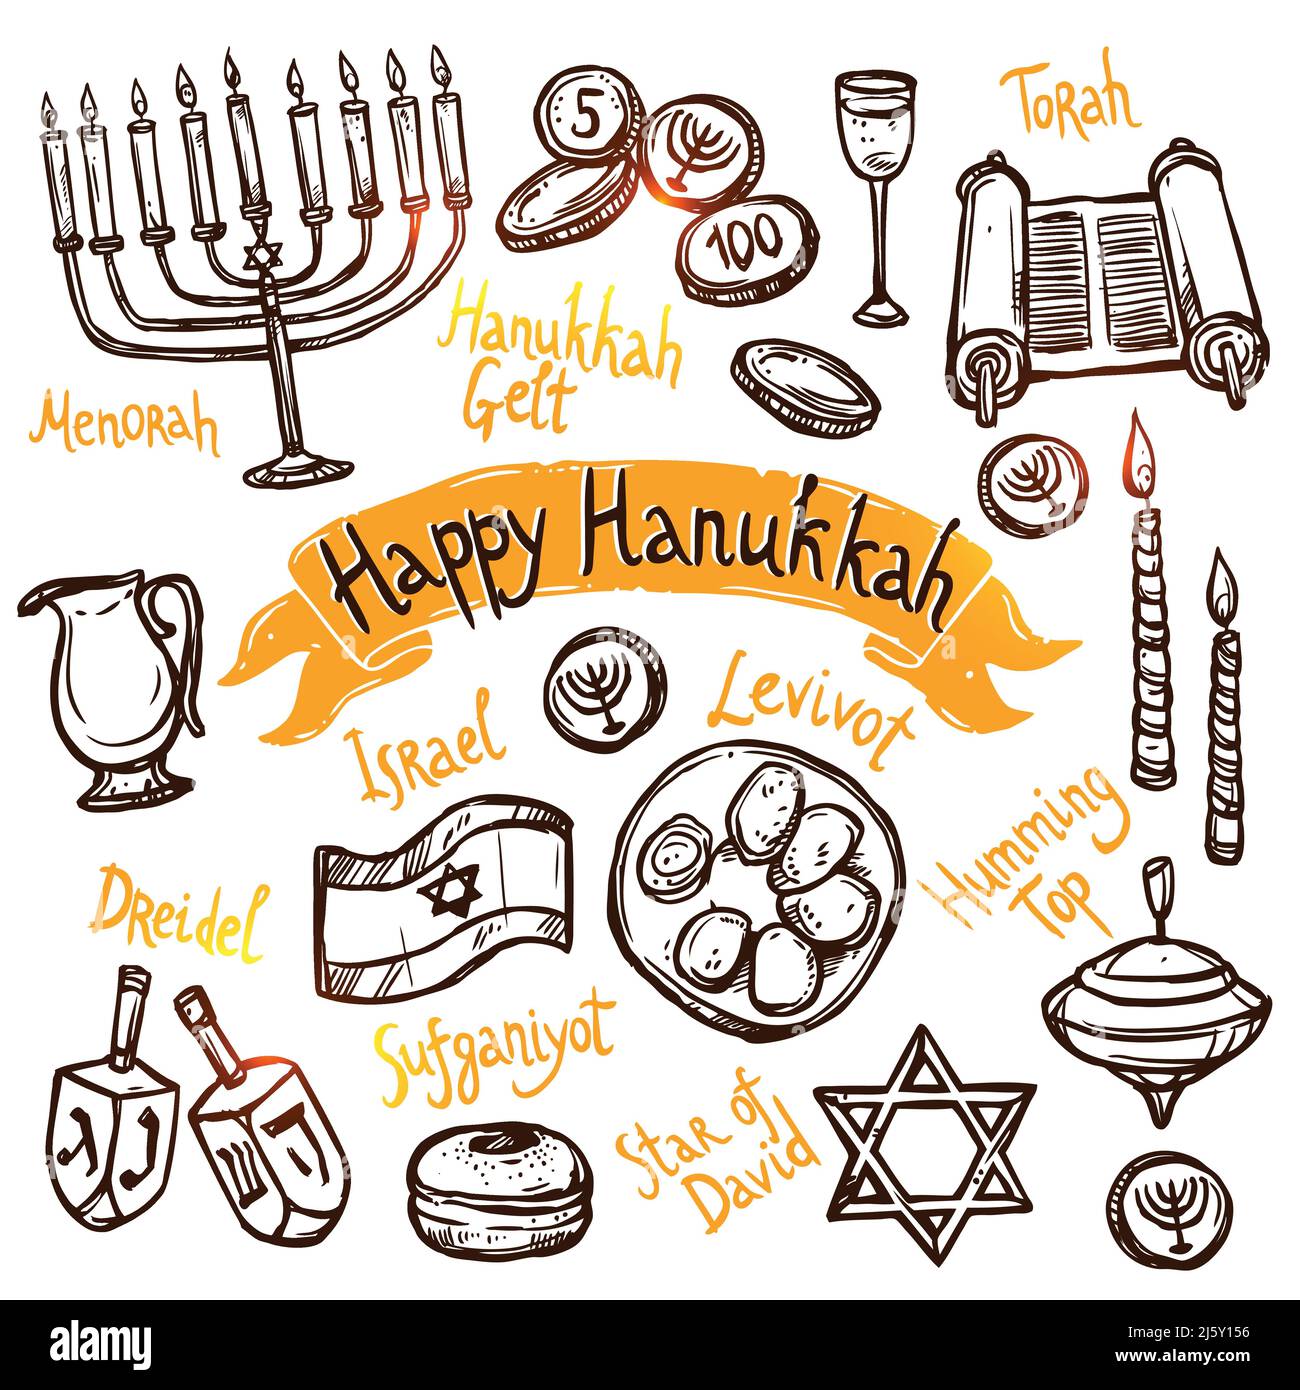 Hanukkah traditionelle jüdische Feiertag Doodle Symbole setzen isolierte Vektor-Illustration Stock Vektor